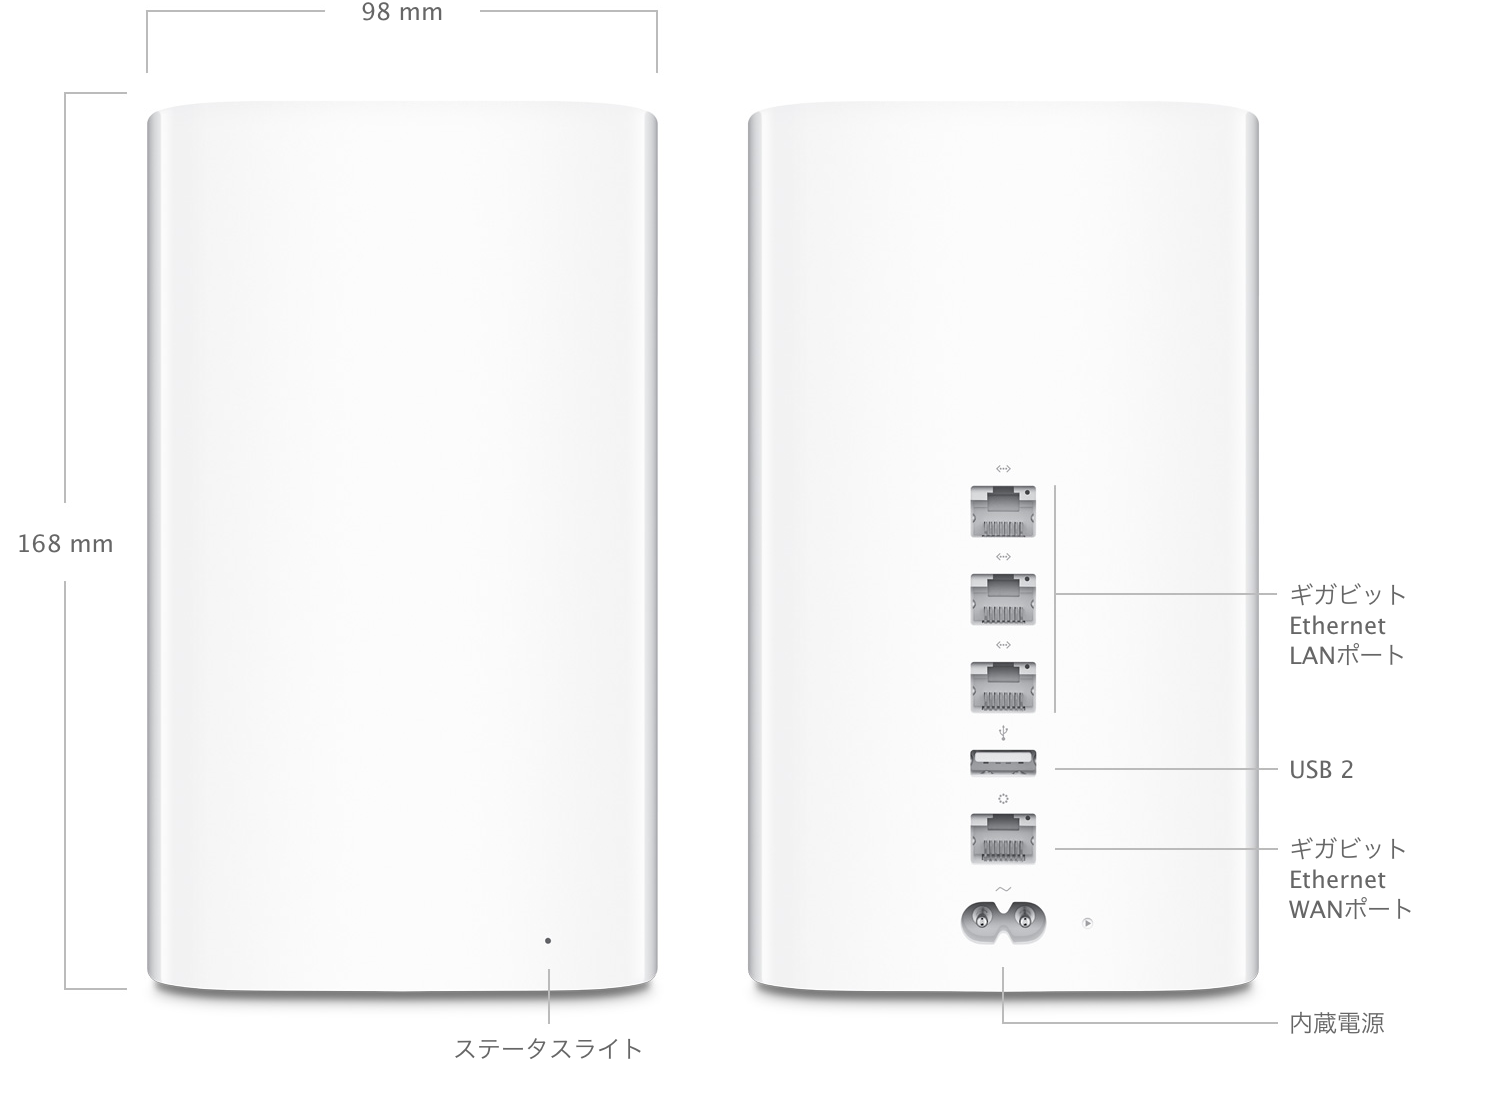 AirMac Extreme 802.11ac - 技術仕様 - Apple サポート (日本)